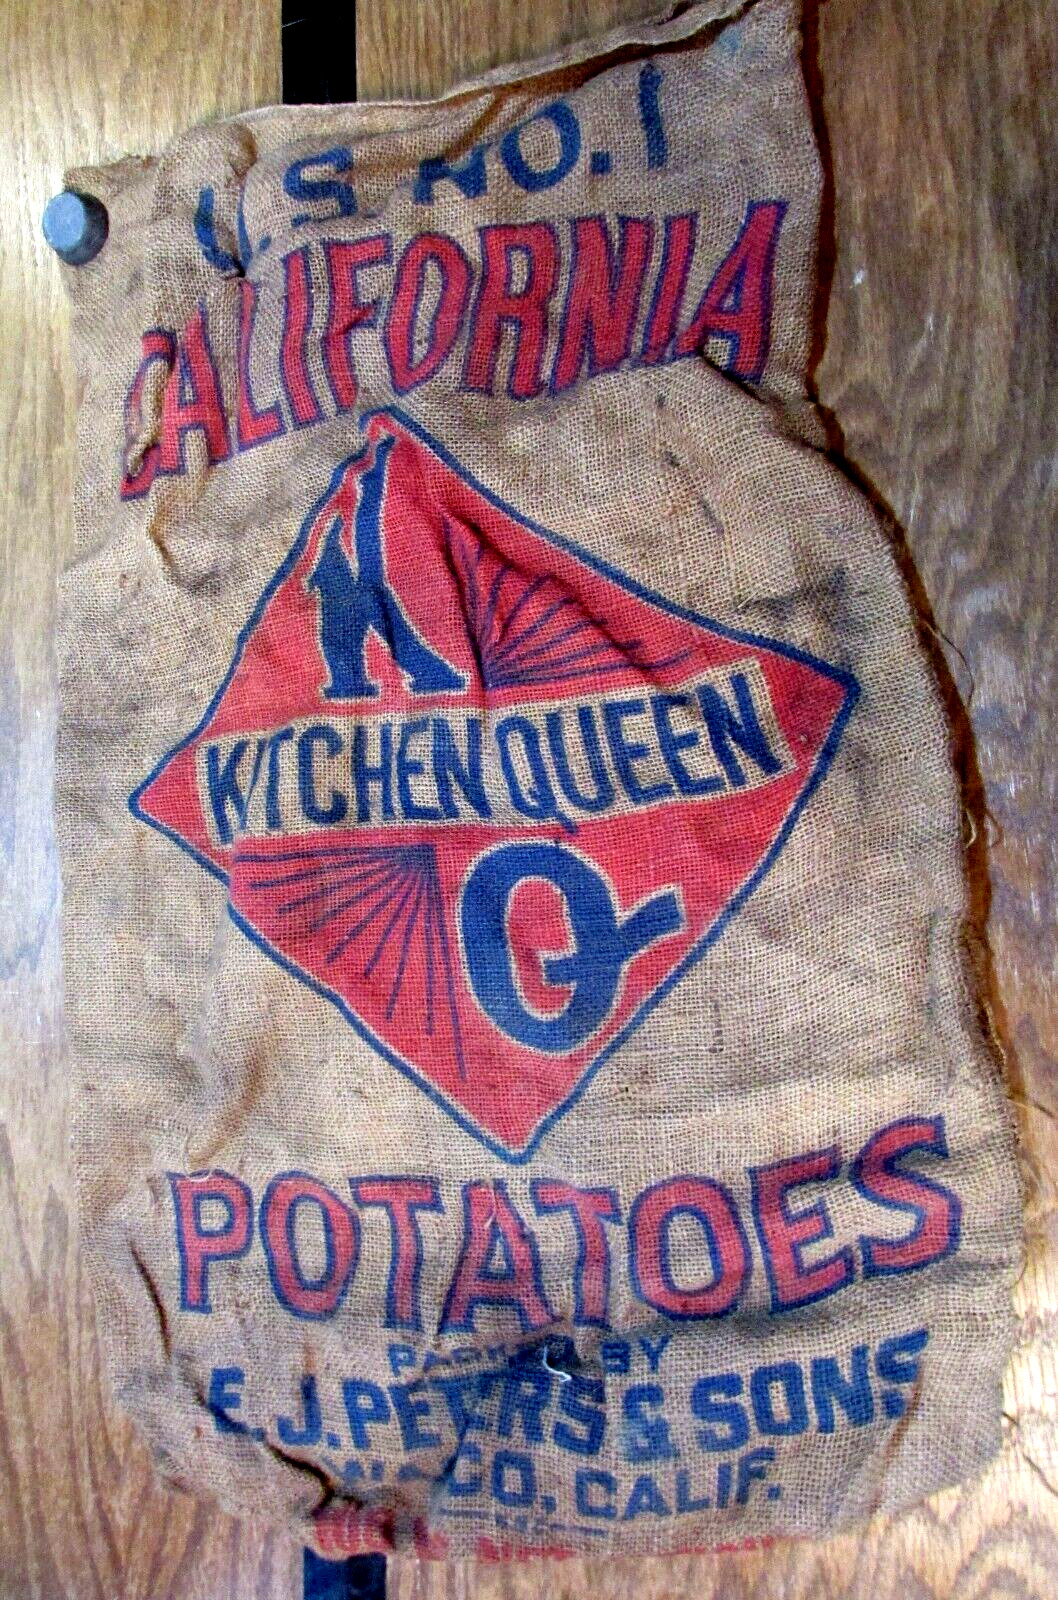 Vintage Kitchen Queen Wasco CA California Potato Sack Old 100 lb Size Burlap Bag